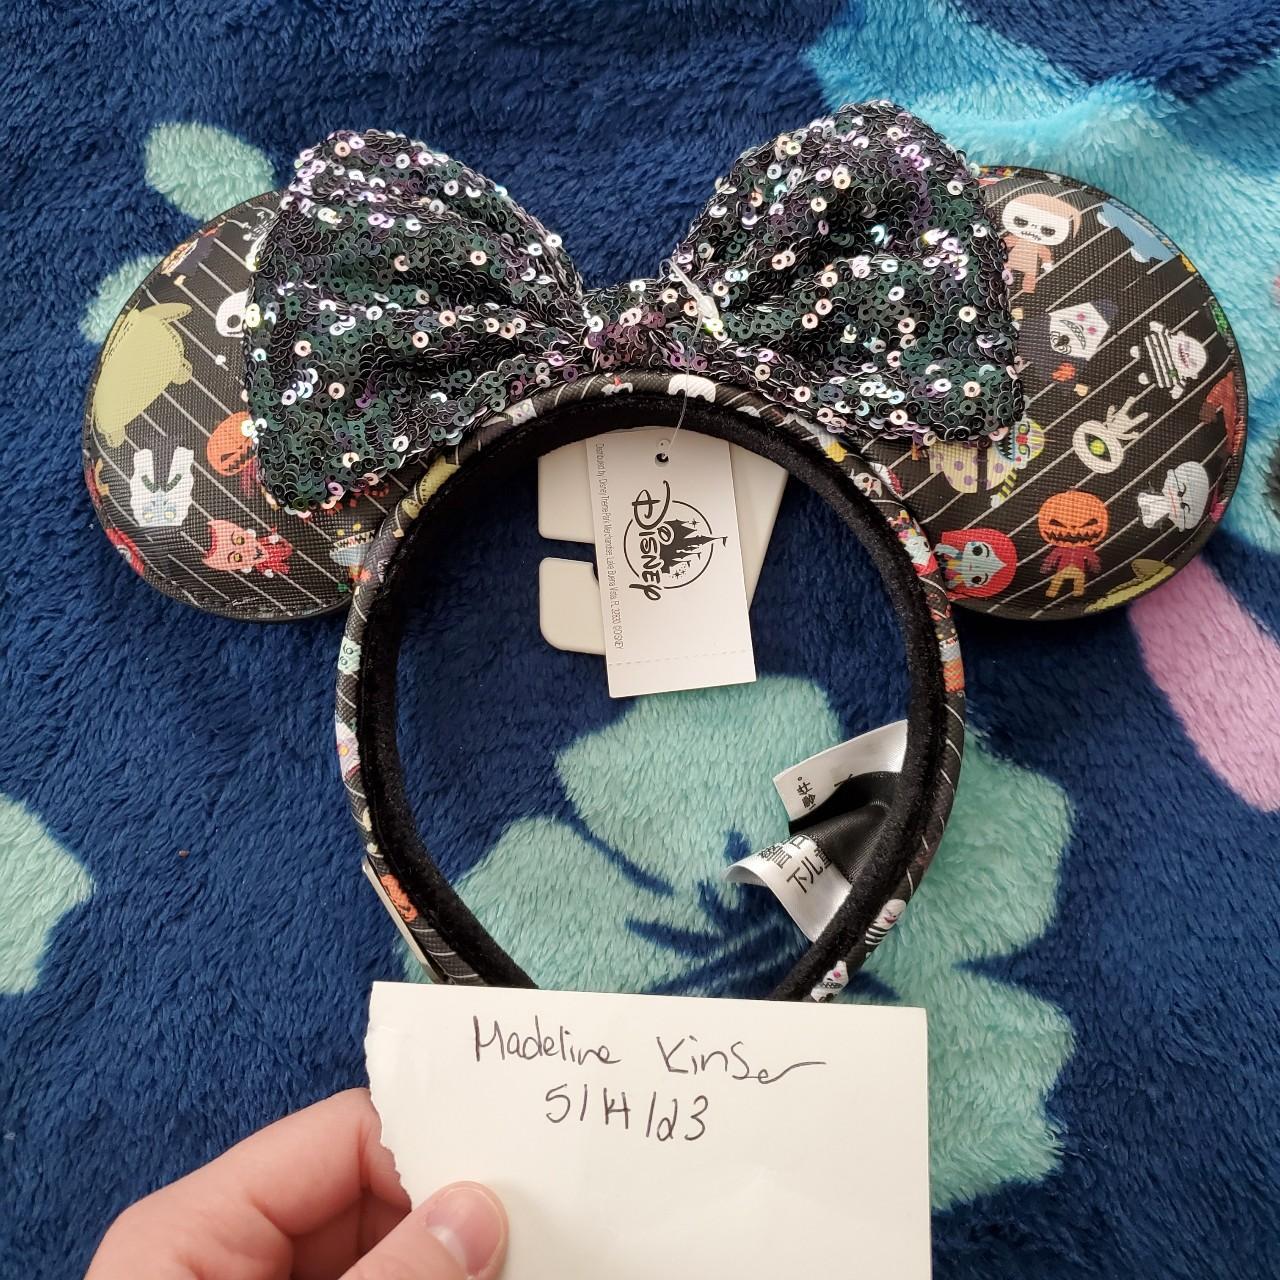 Disney Parks Loungefly Minnie Ears Headband - Nightmare Before Christmas